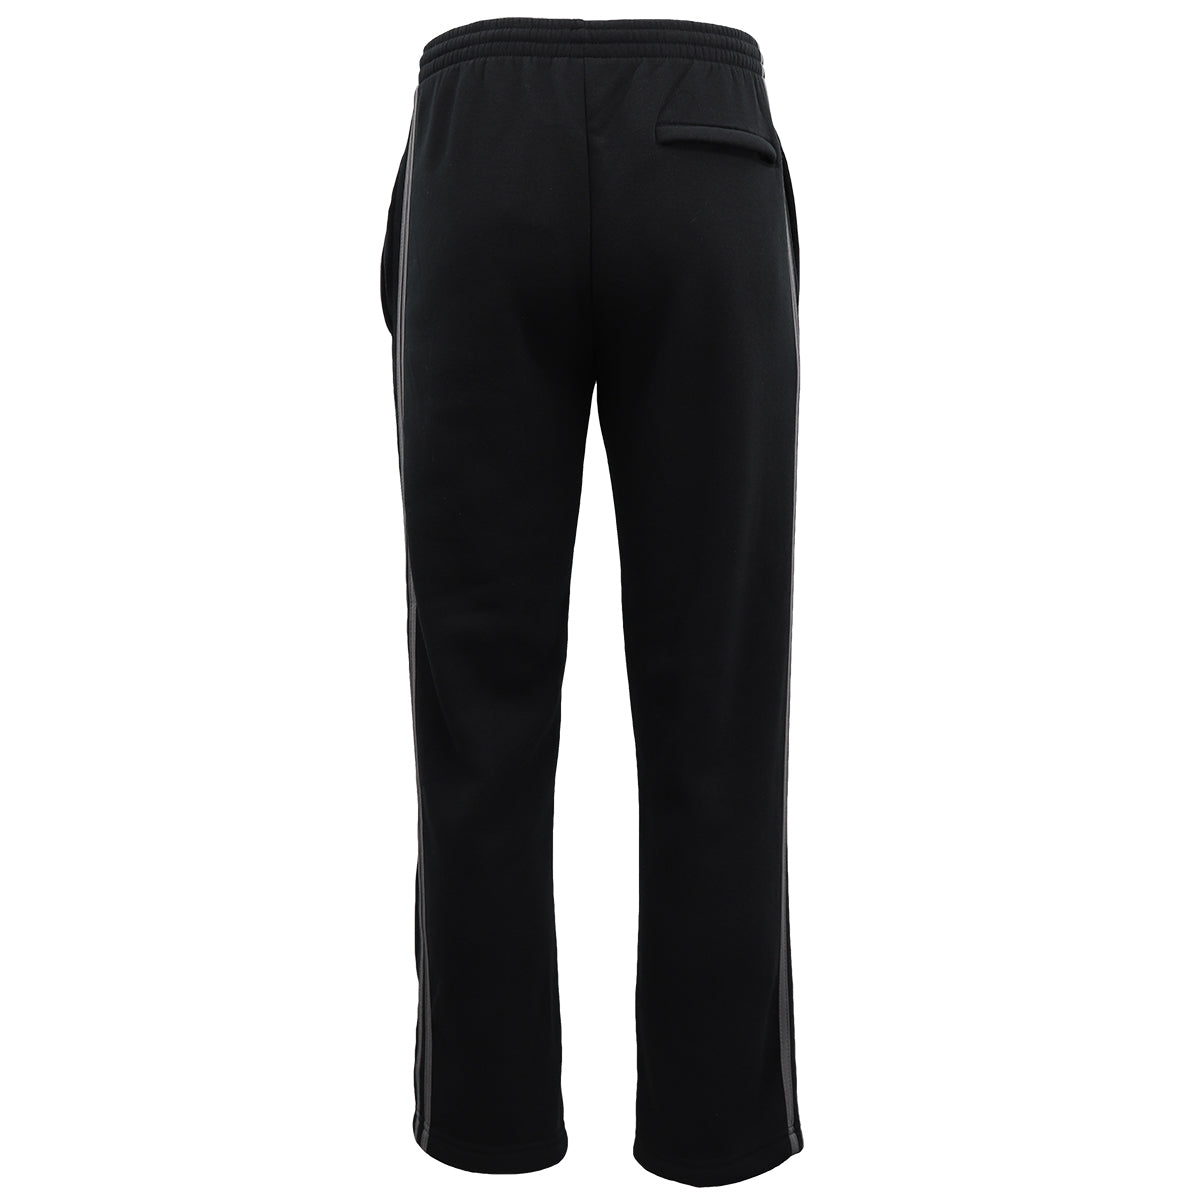 Men's Fleece Casual Sports Track Pants w Zip Pocket Striped Sweat Trousers S-6XL, Charcoal w Black Stripes, 3XL